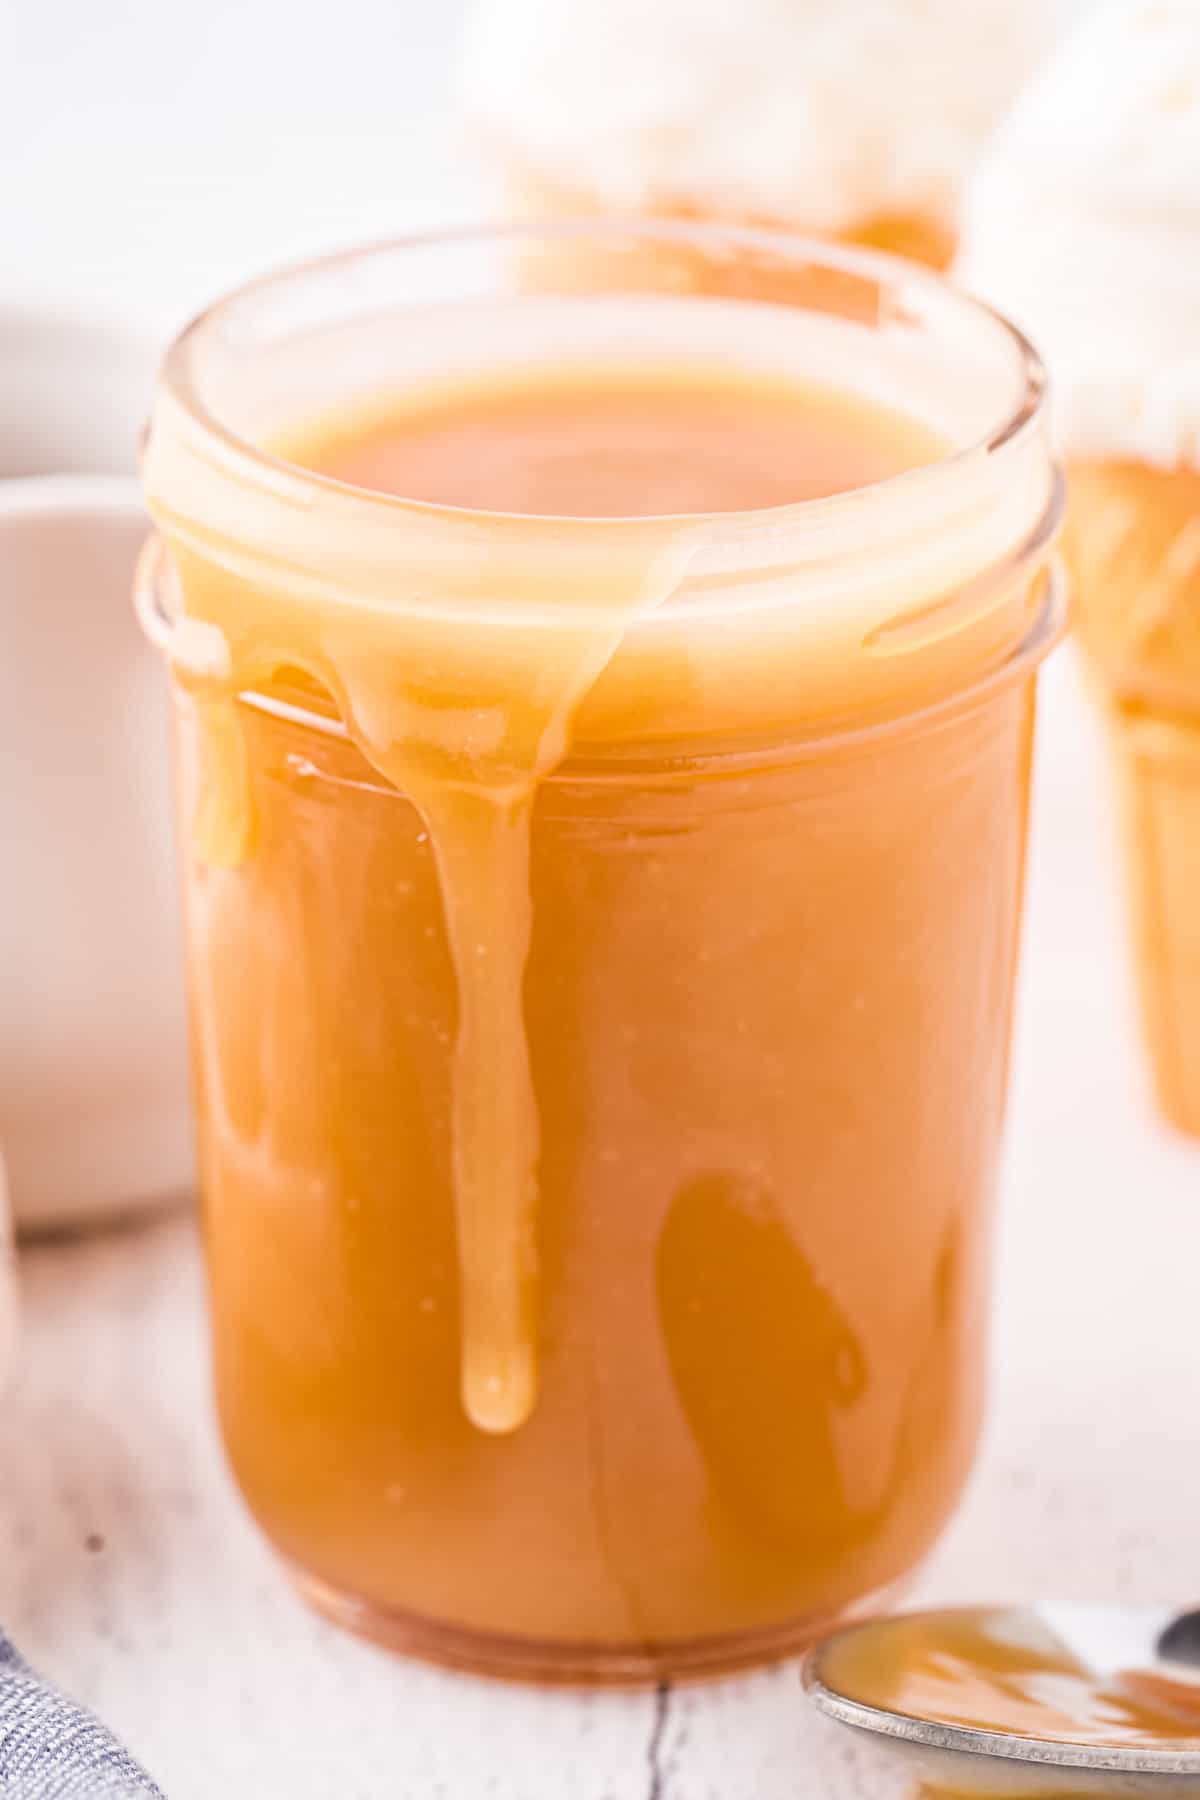 Wide mouth mason jar full of homemade caramel sauce.